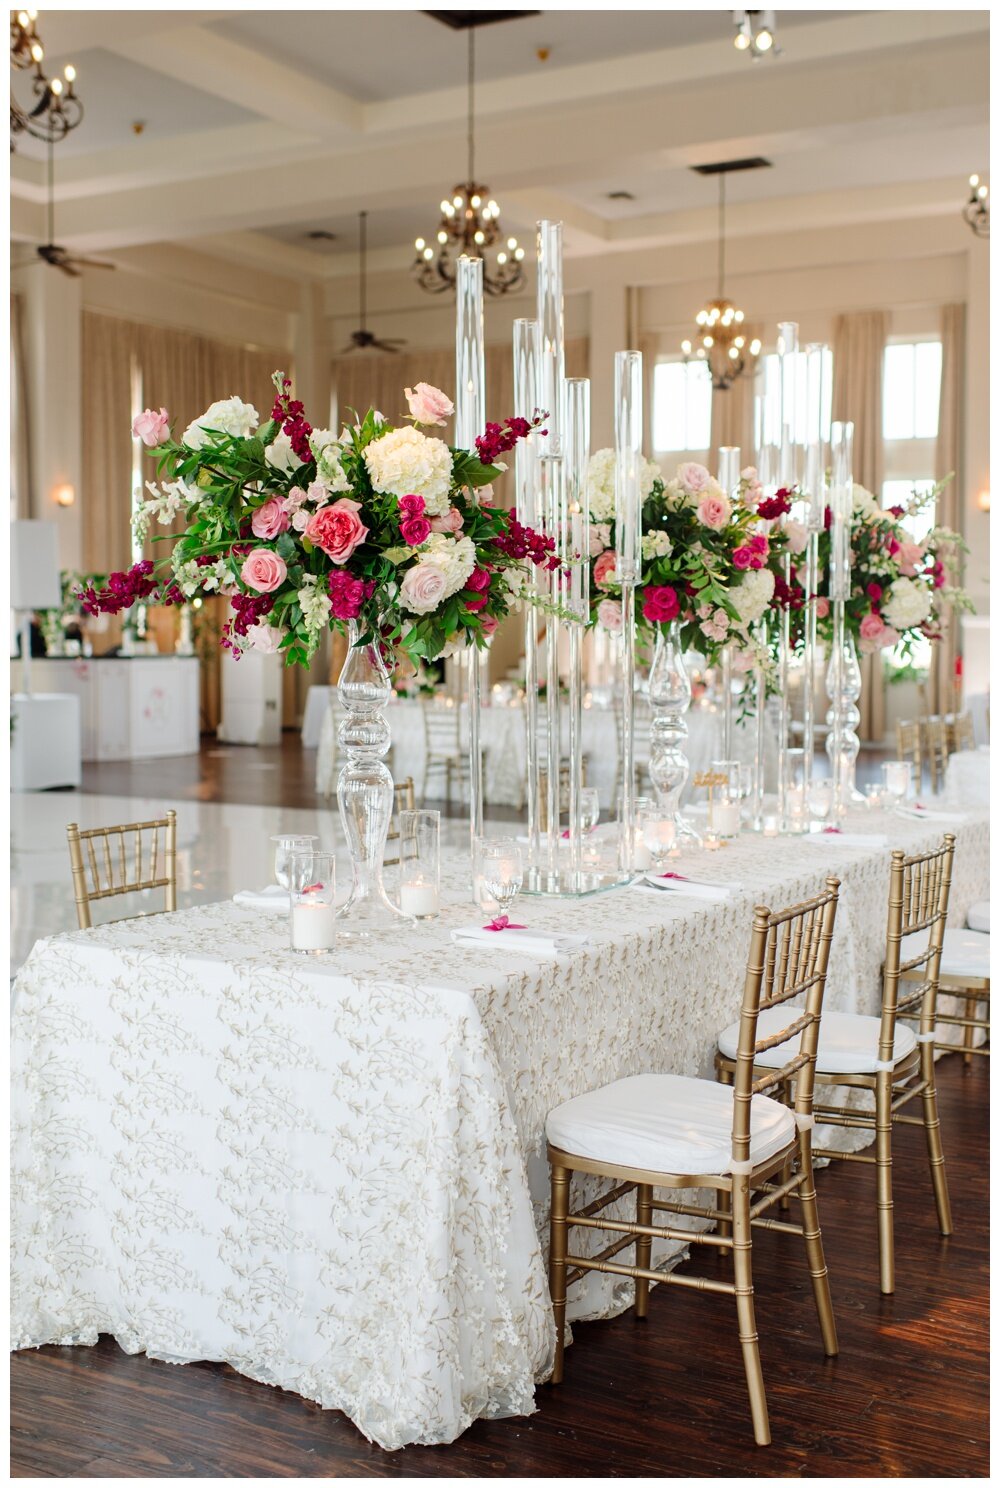 Hot Pink & Blush Wedding, The Room on Main, Haute Floral 31.jpg